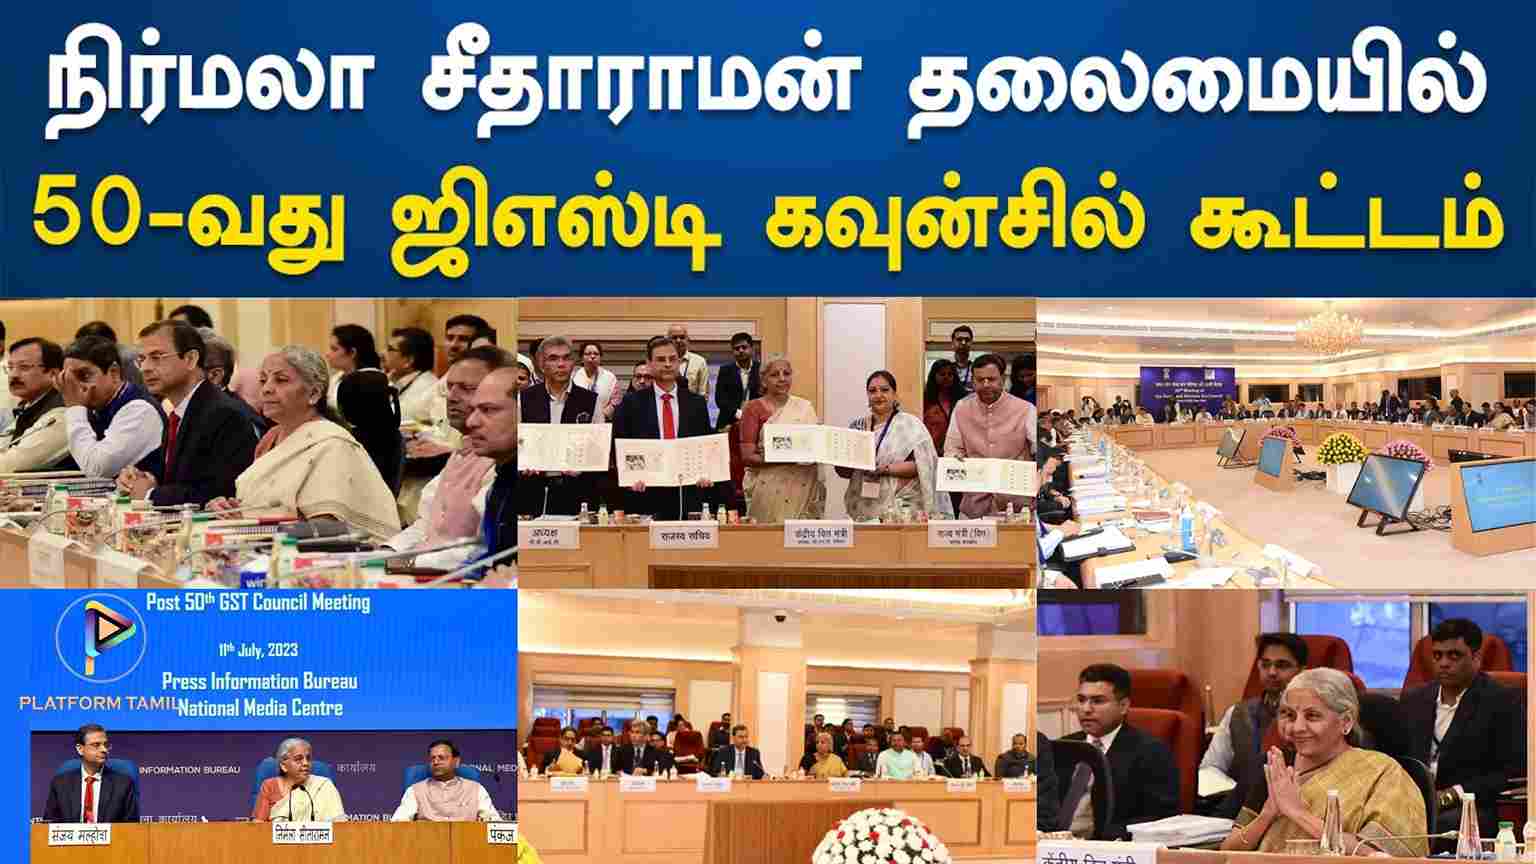 The 50th GST Council Meeting - Platform Tamil